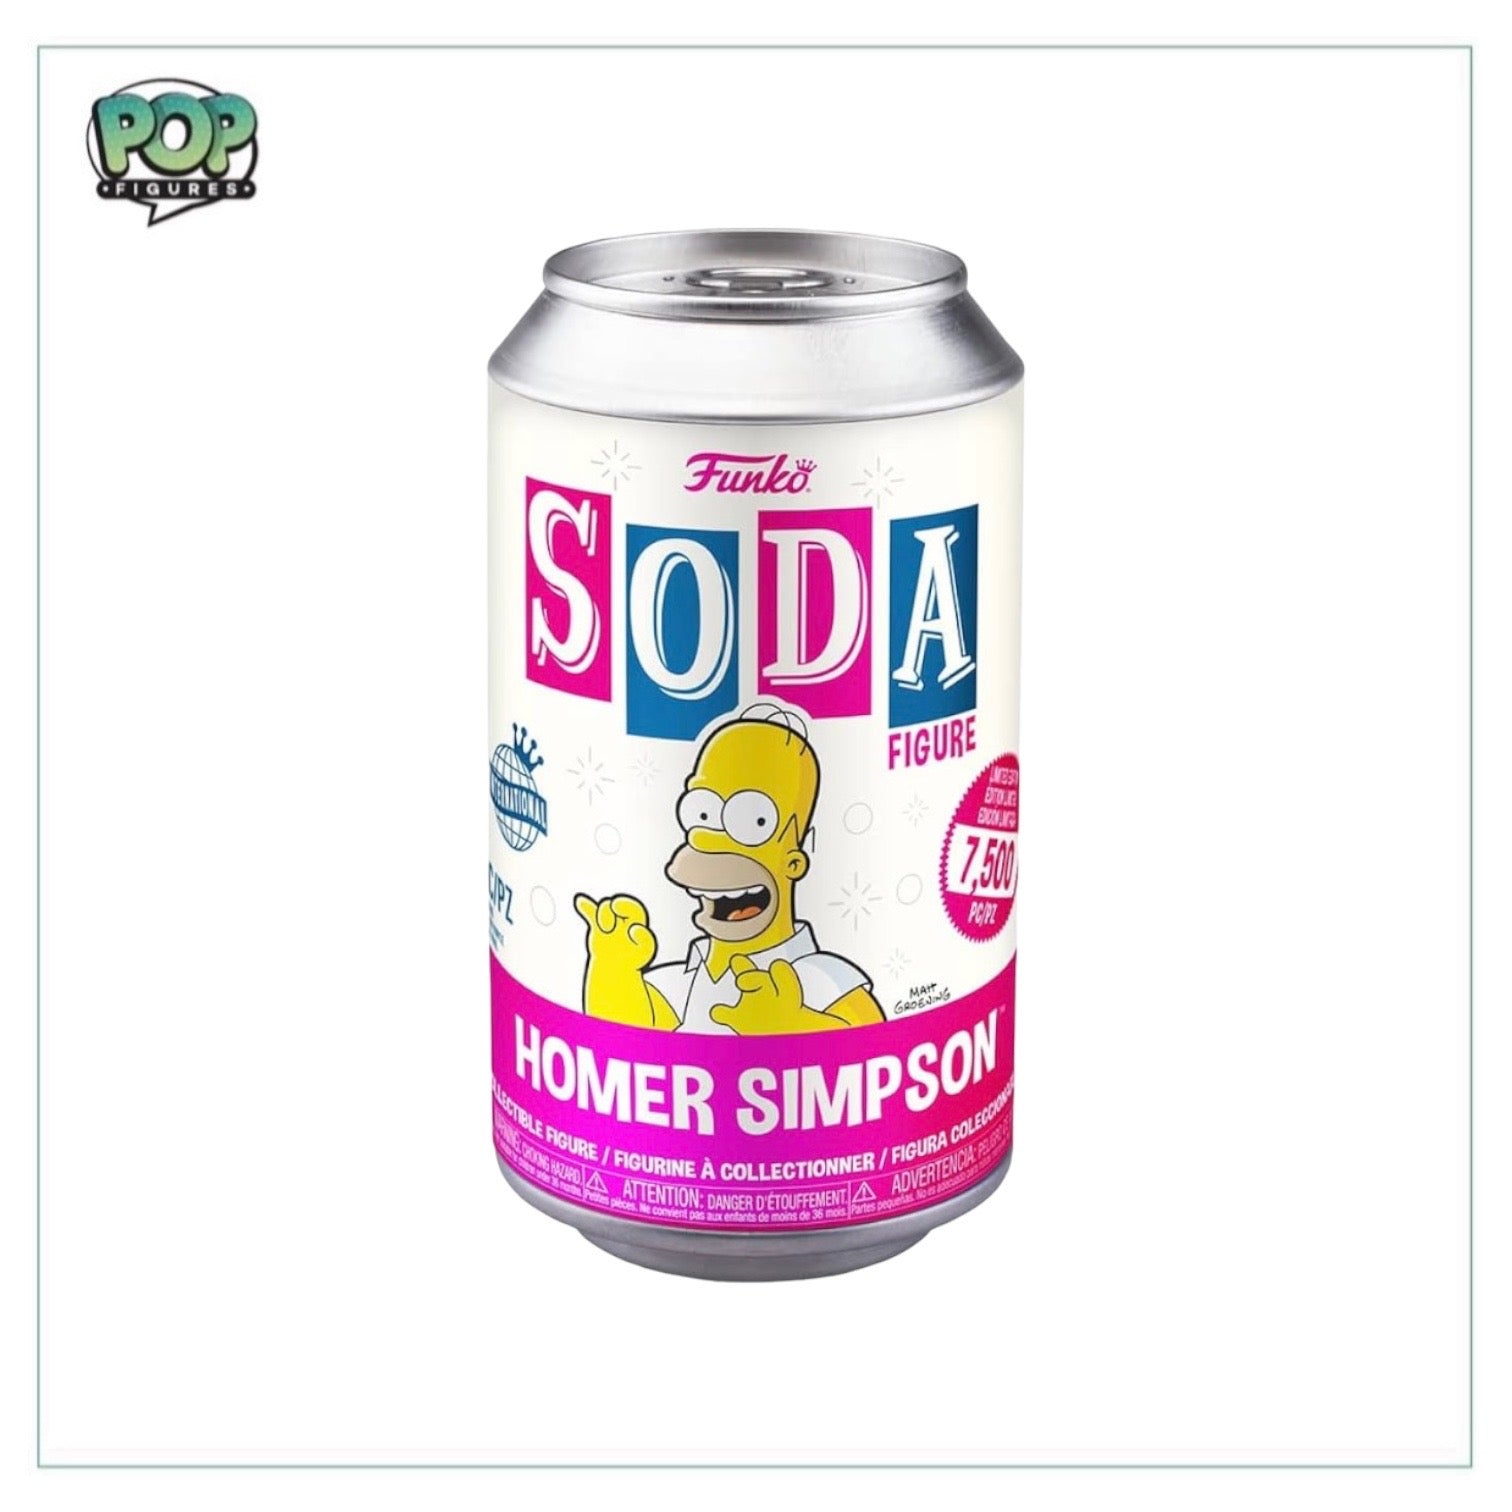 Homer Simpson Funko Soda Vinyl Figure! - The Simpsons - International LE7500 Pcs - Chance of Chase